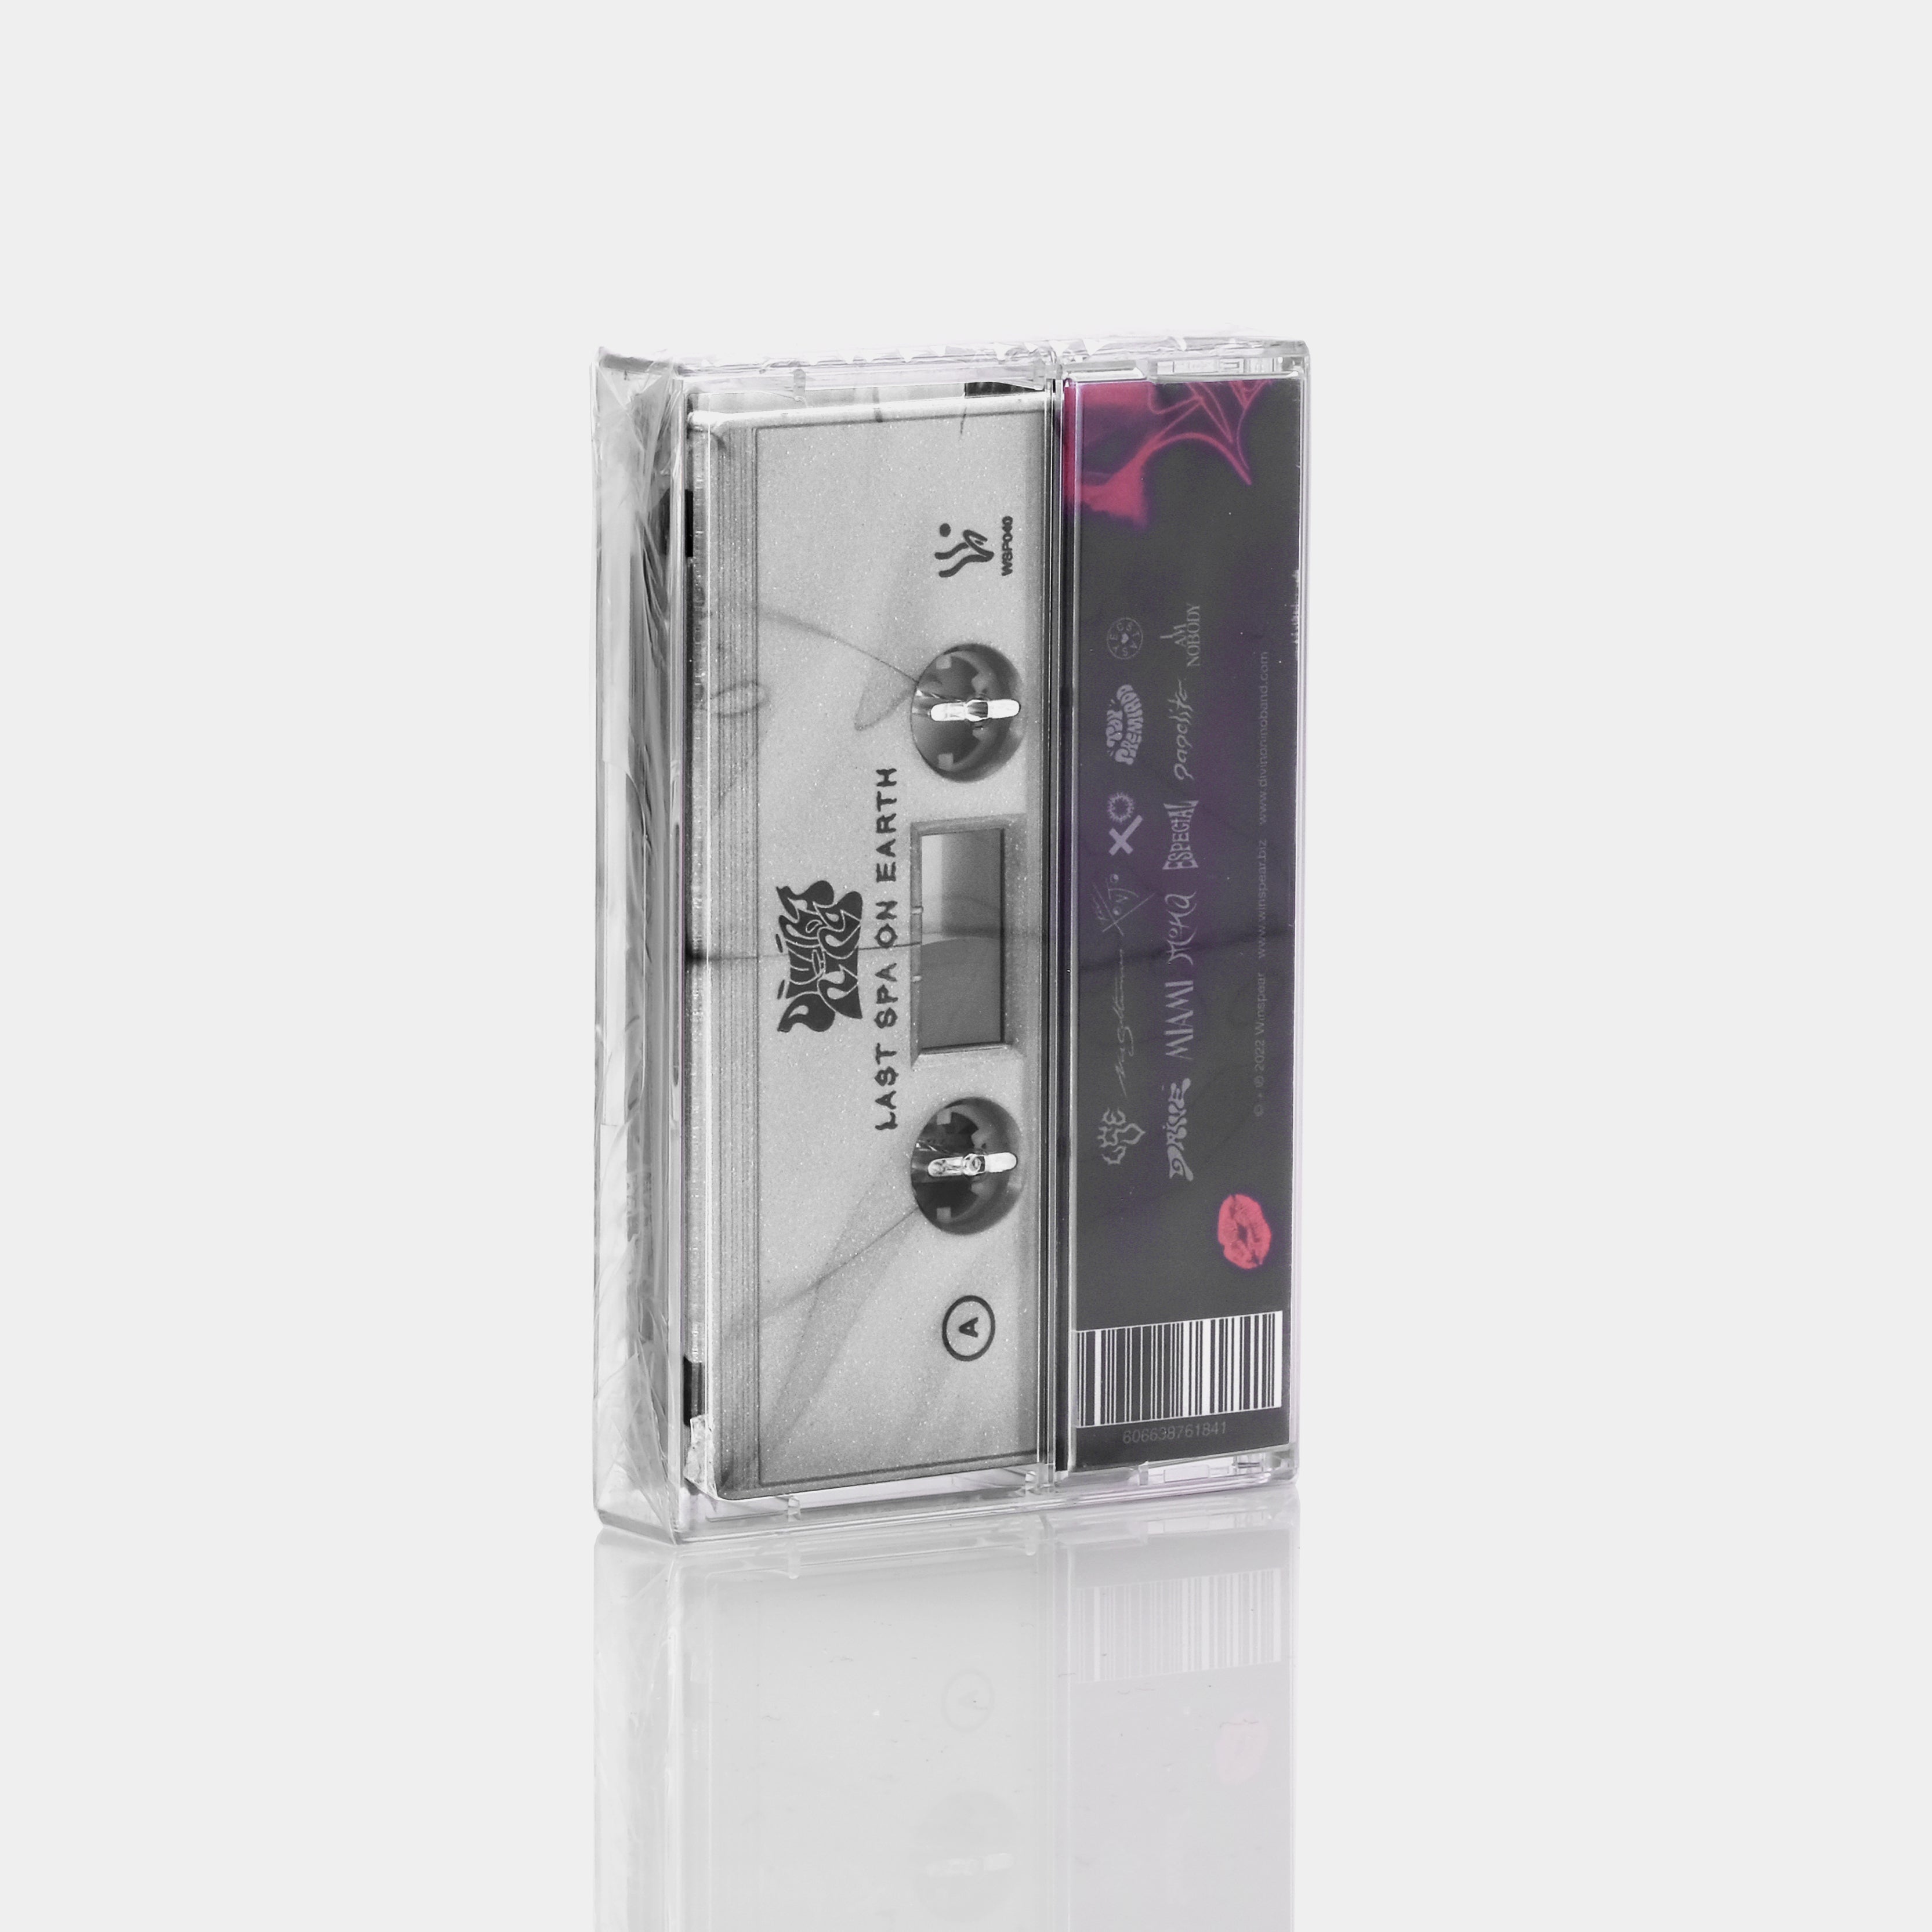 Divino Niño - Last Spa On Earth Cassette Tape